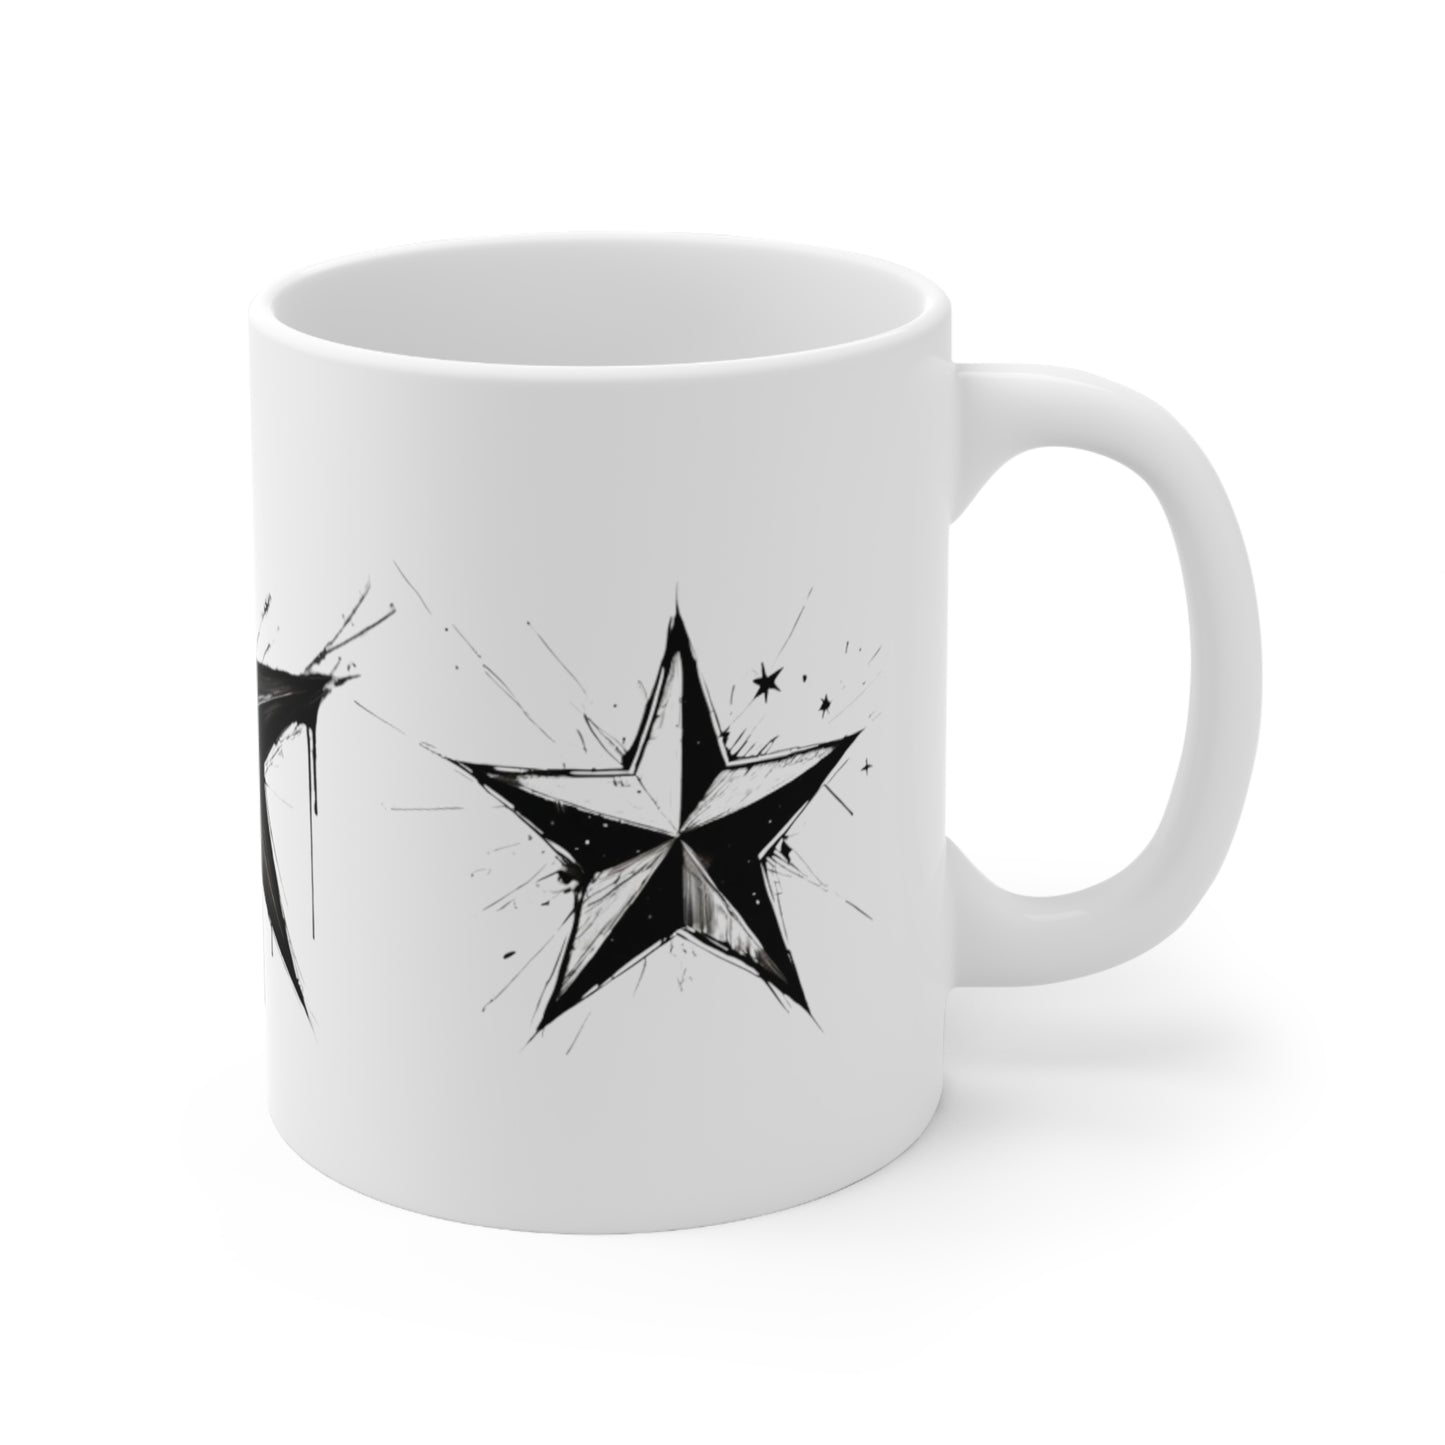 Black and White Sketched Stars Mug - Ceramic Coffee Mug 11oz